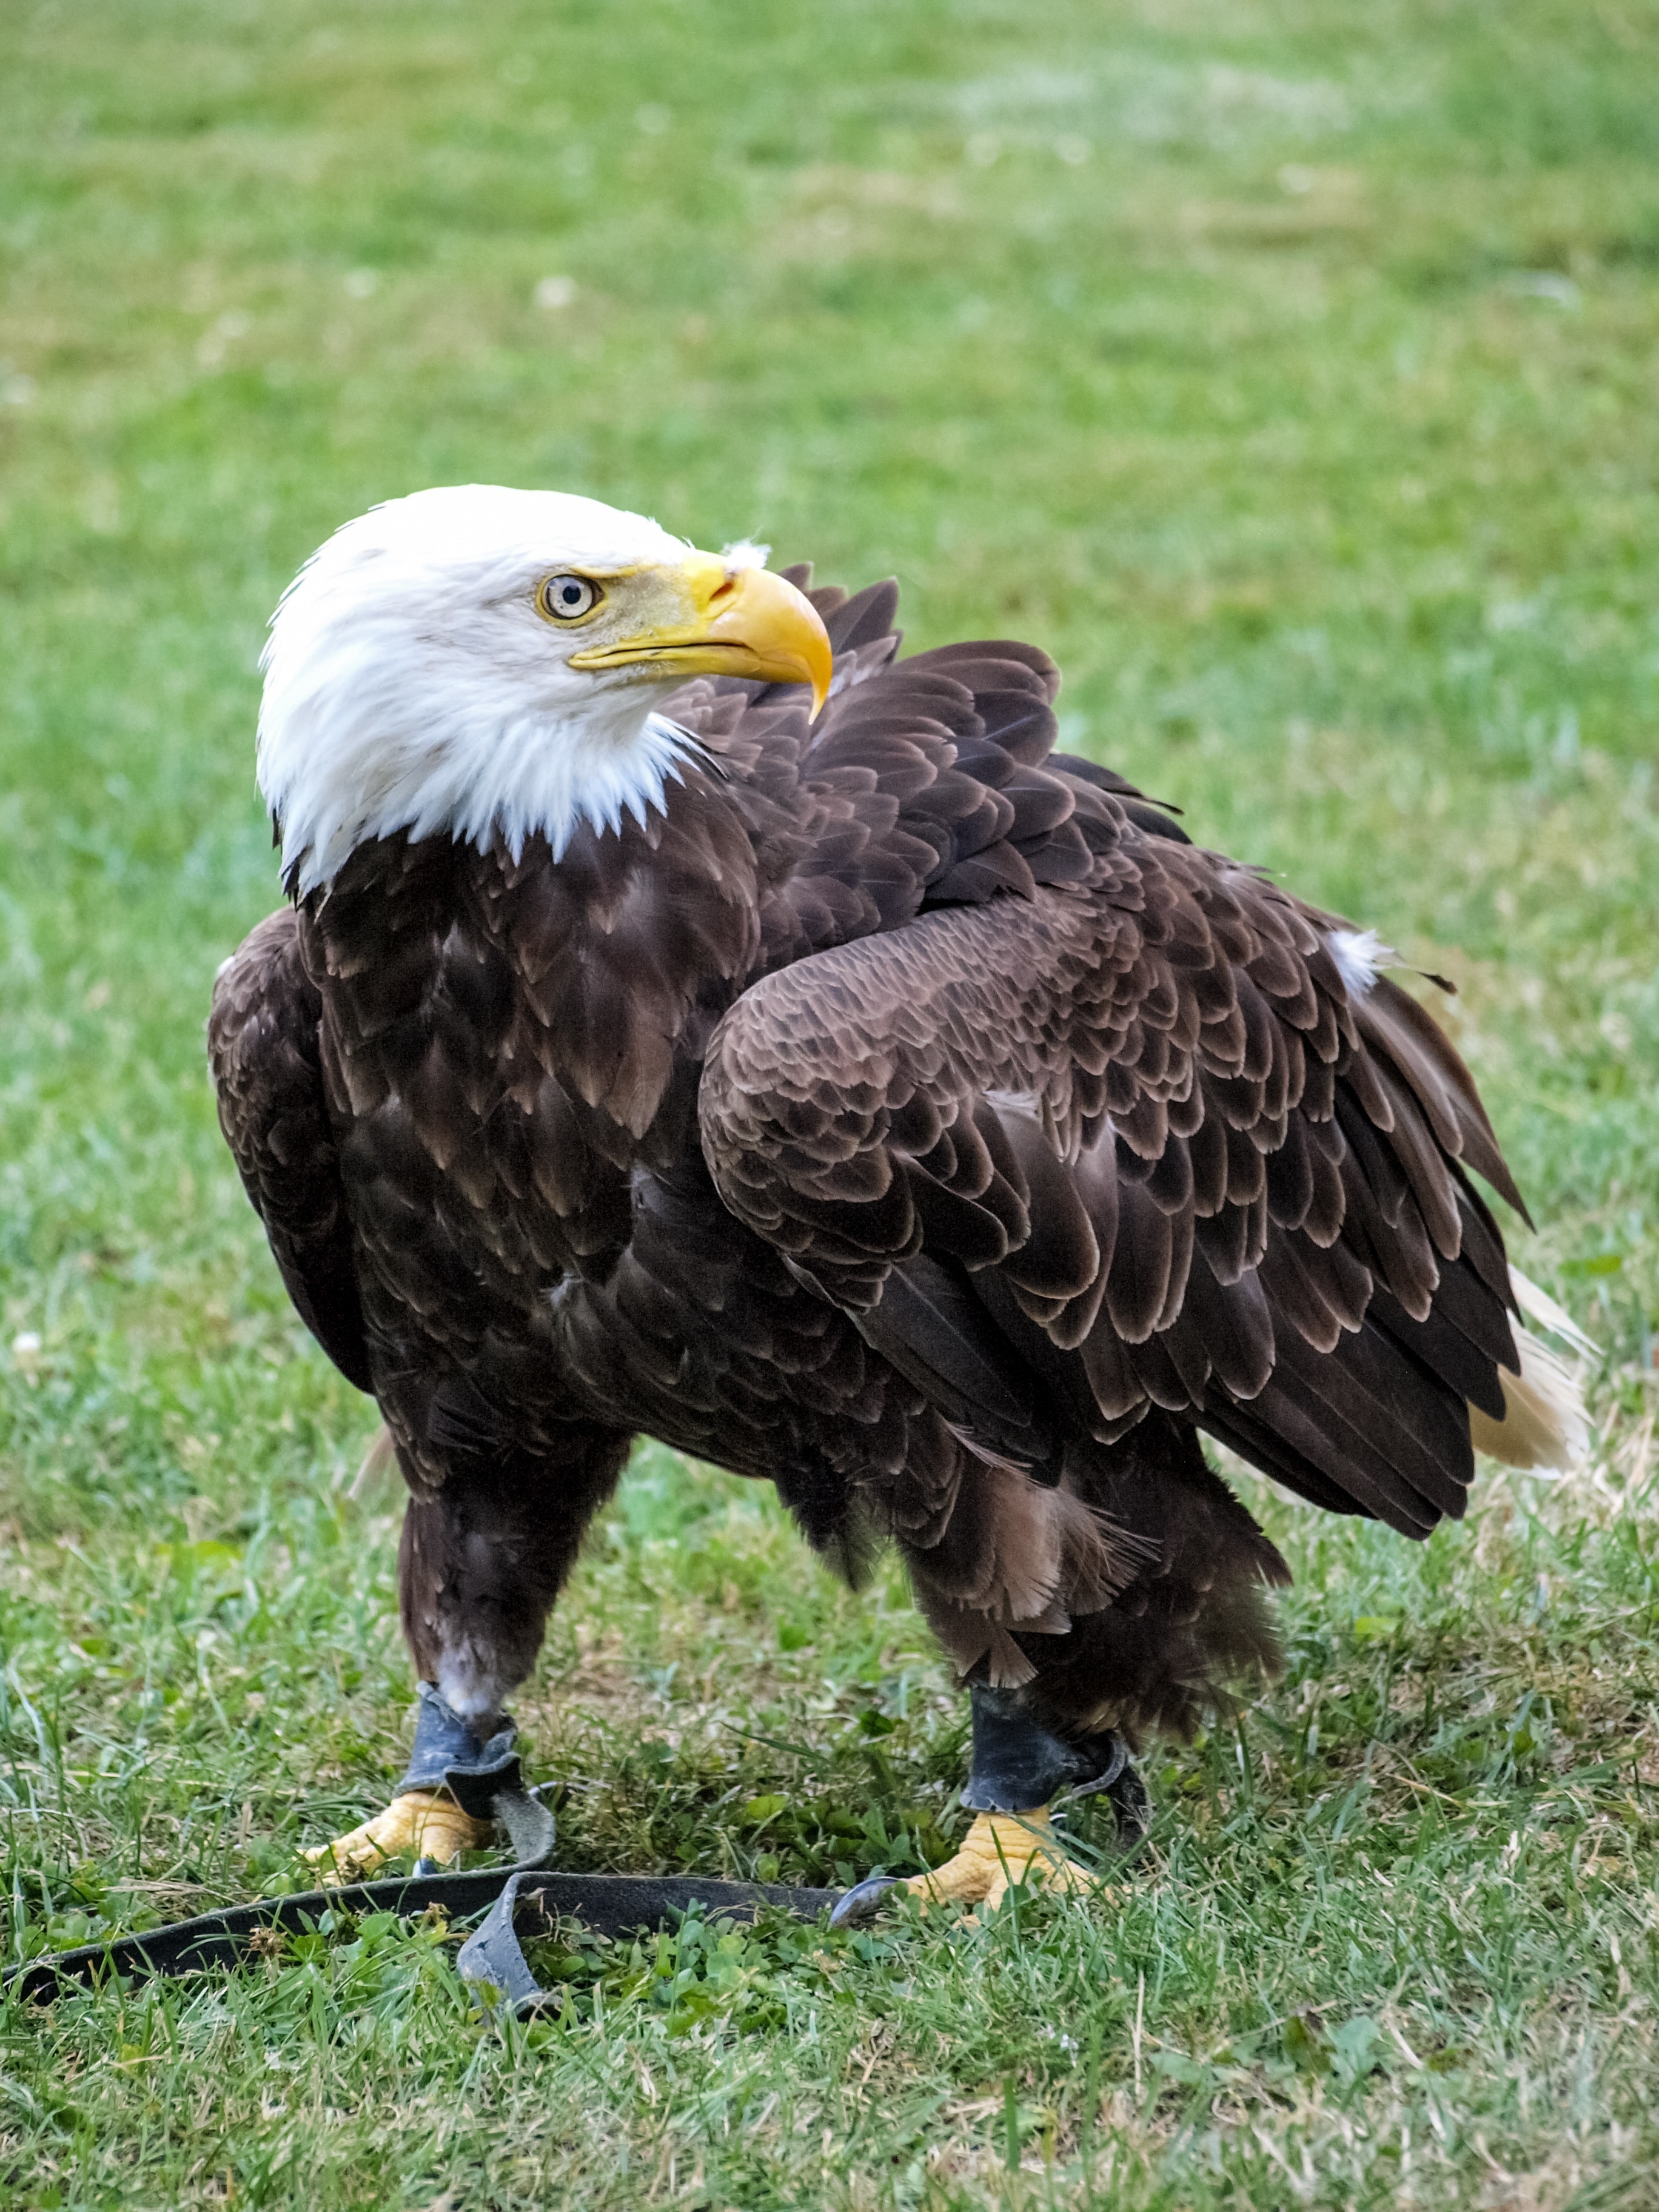 bald eagle in green grass field